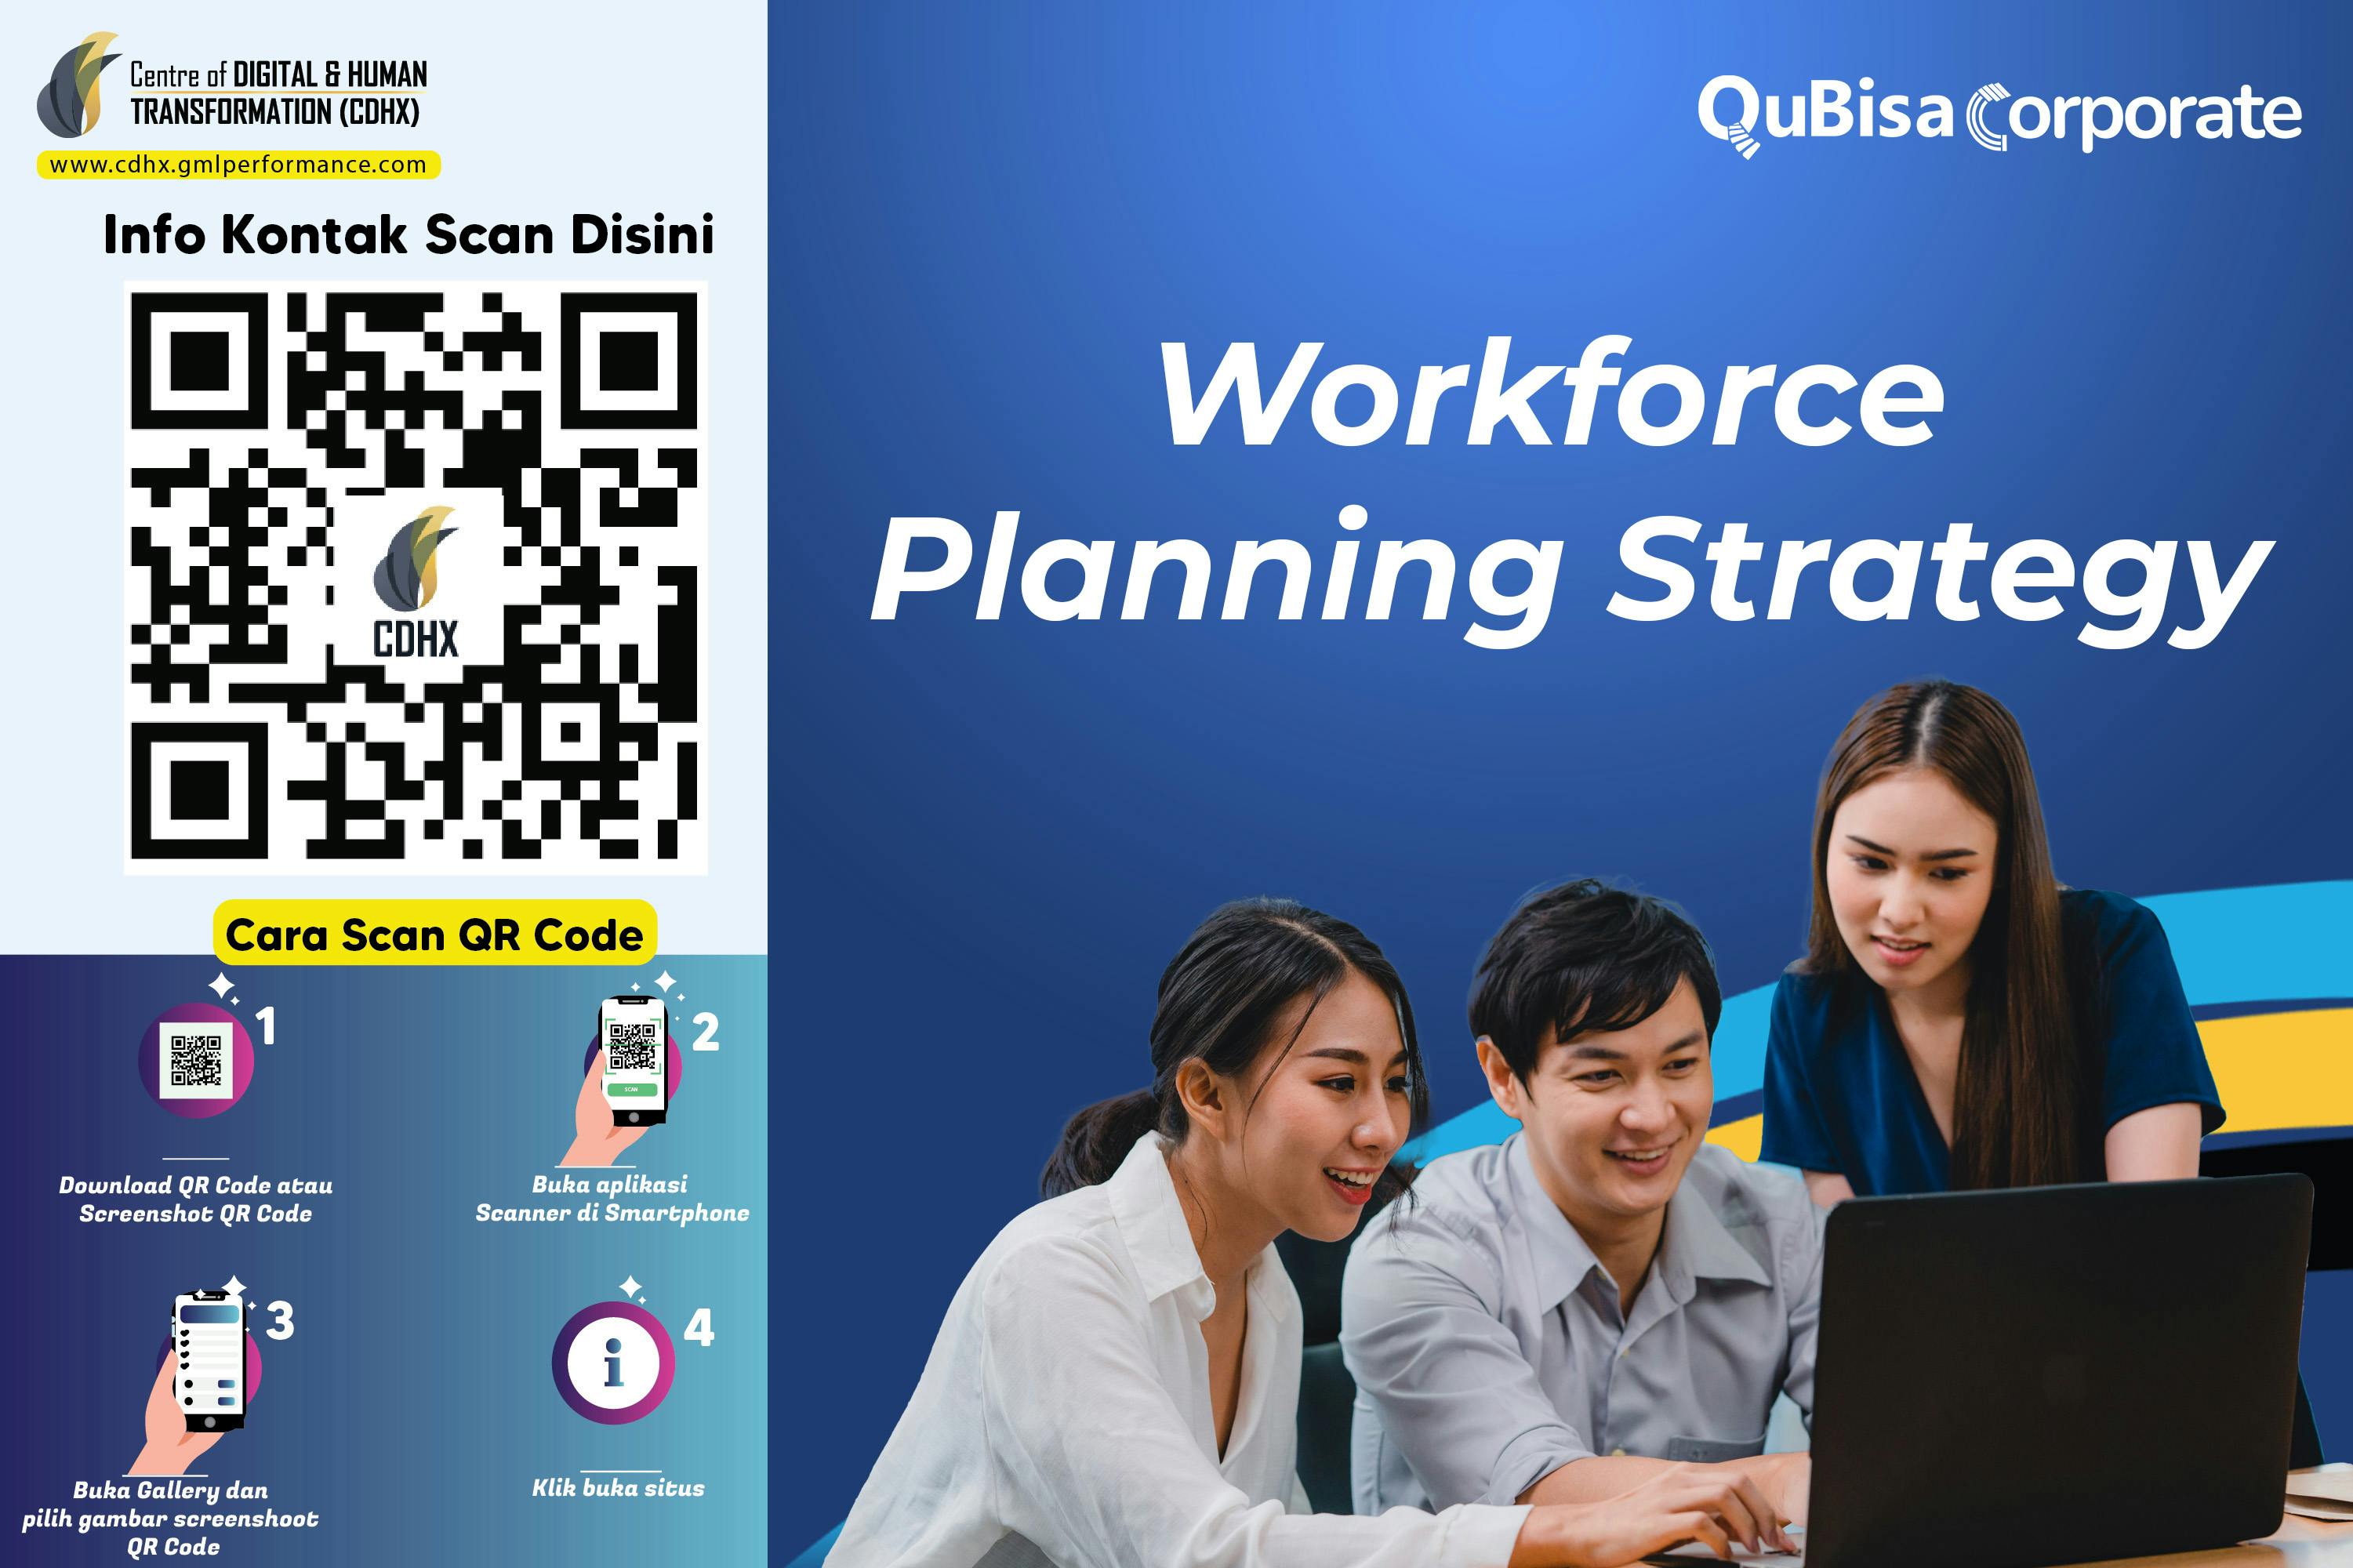 Workforce Planning Strategy